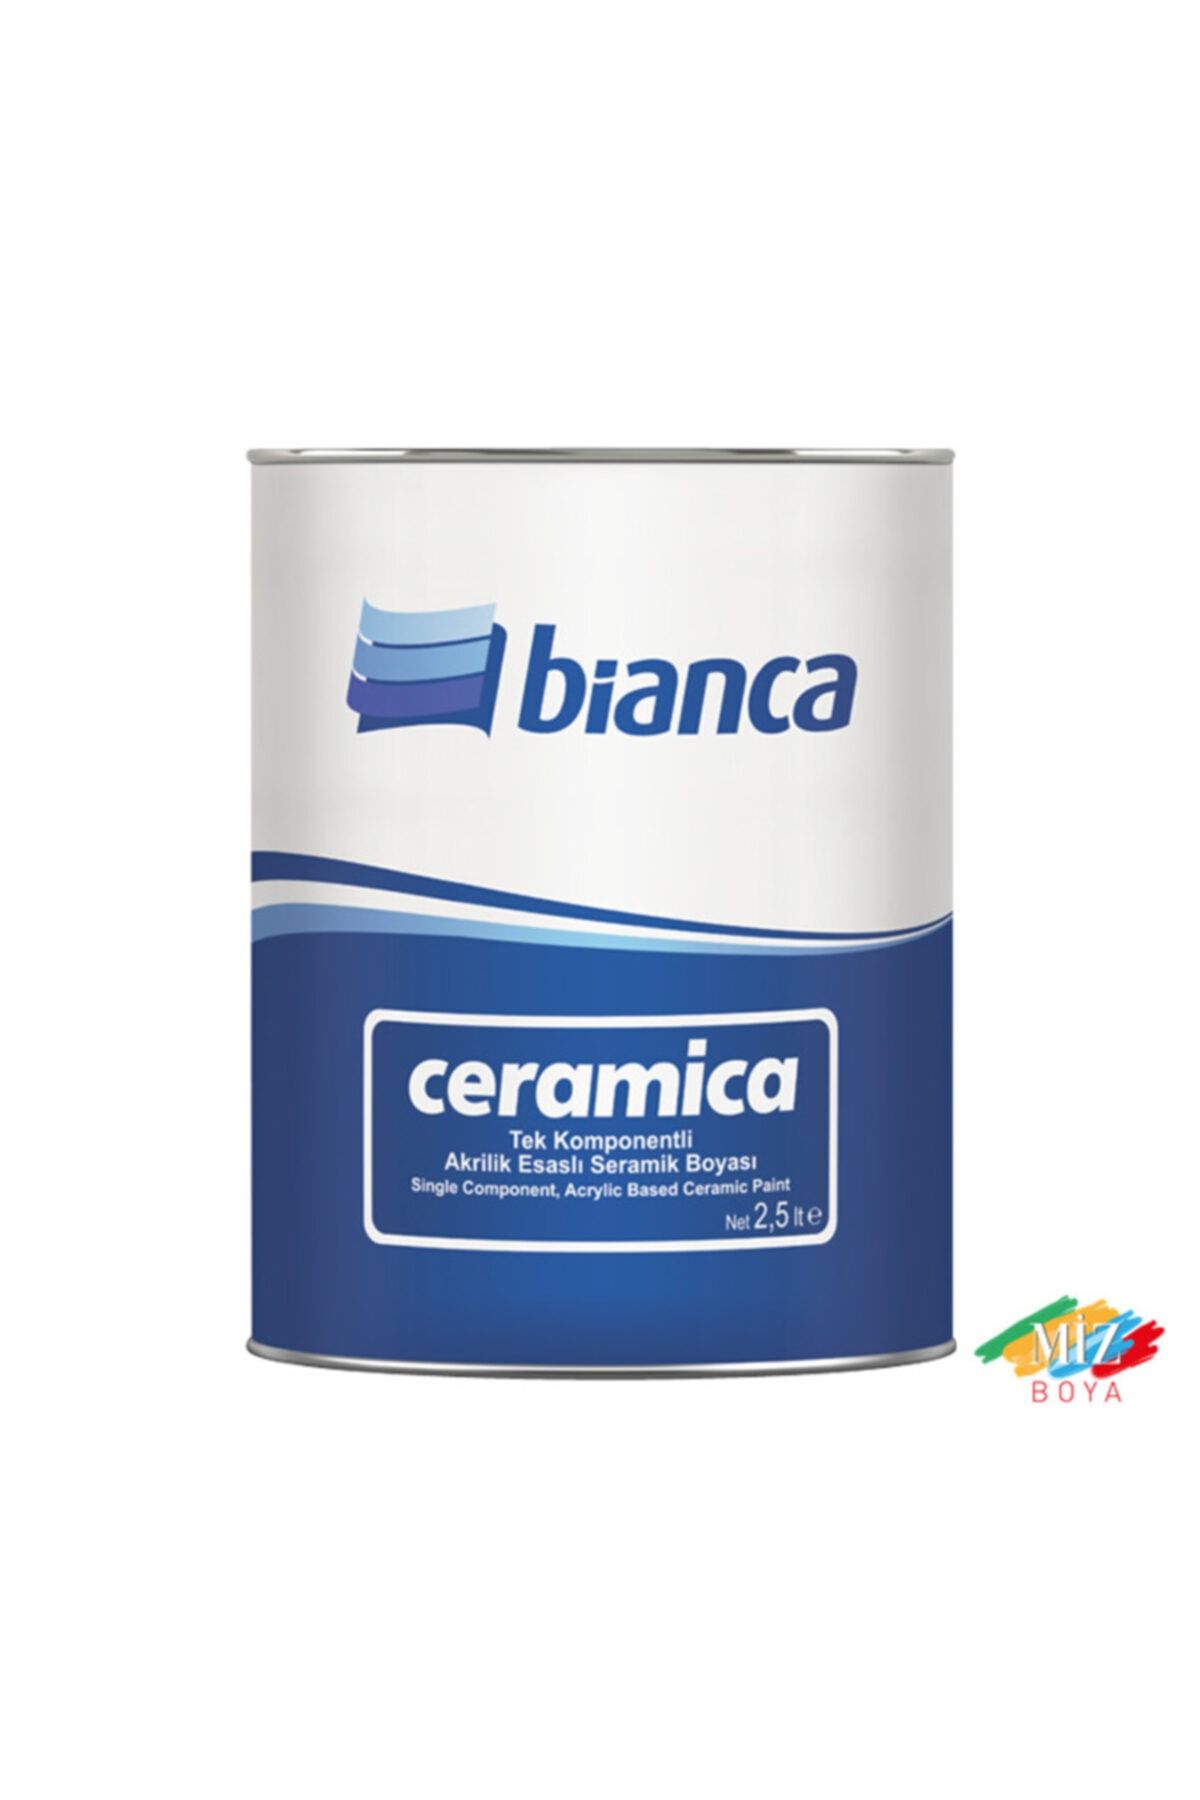 Bianca Ceramica Seramik Boyası -2,5 Lt